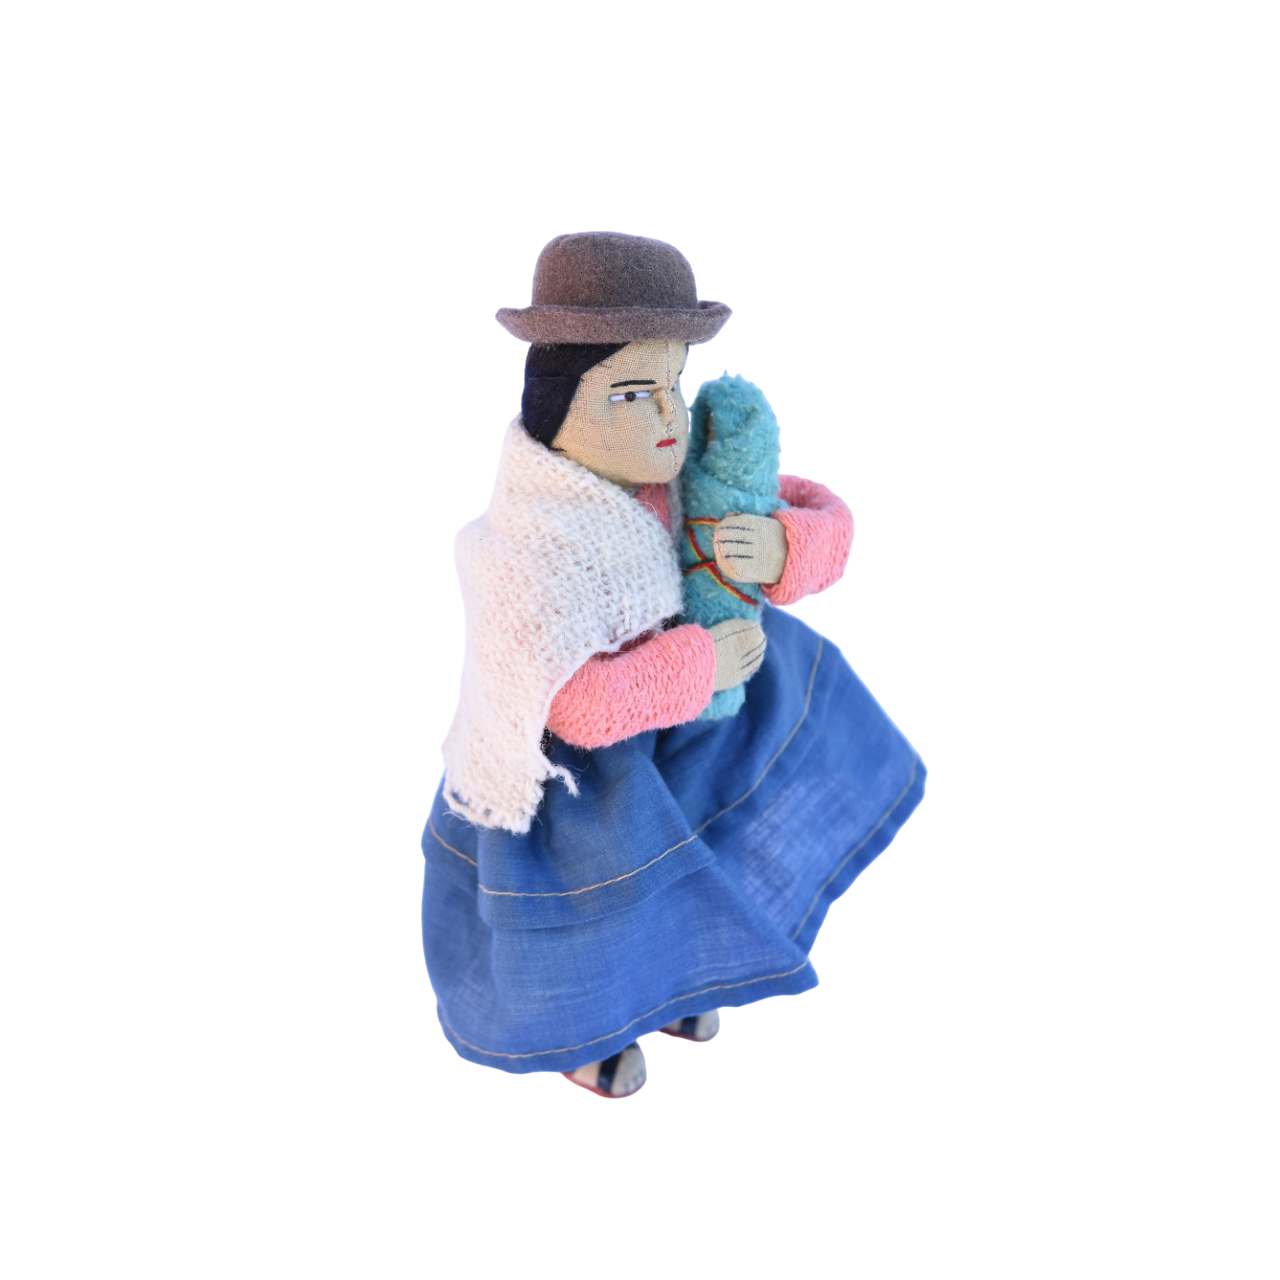 Bolivian Cholita with Doll, Bolivian Doll, Bolivian Cholita Doll, Soft Sculpture Doll, Bolivian Soft Sculpture Doll, Vintage Bolivian Folk Art, Vintage Bolivian Folk Art, Bolivian Woman with Baby Doll, Handmade Vintage Bolivian Doll